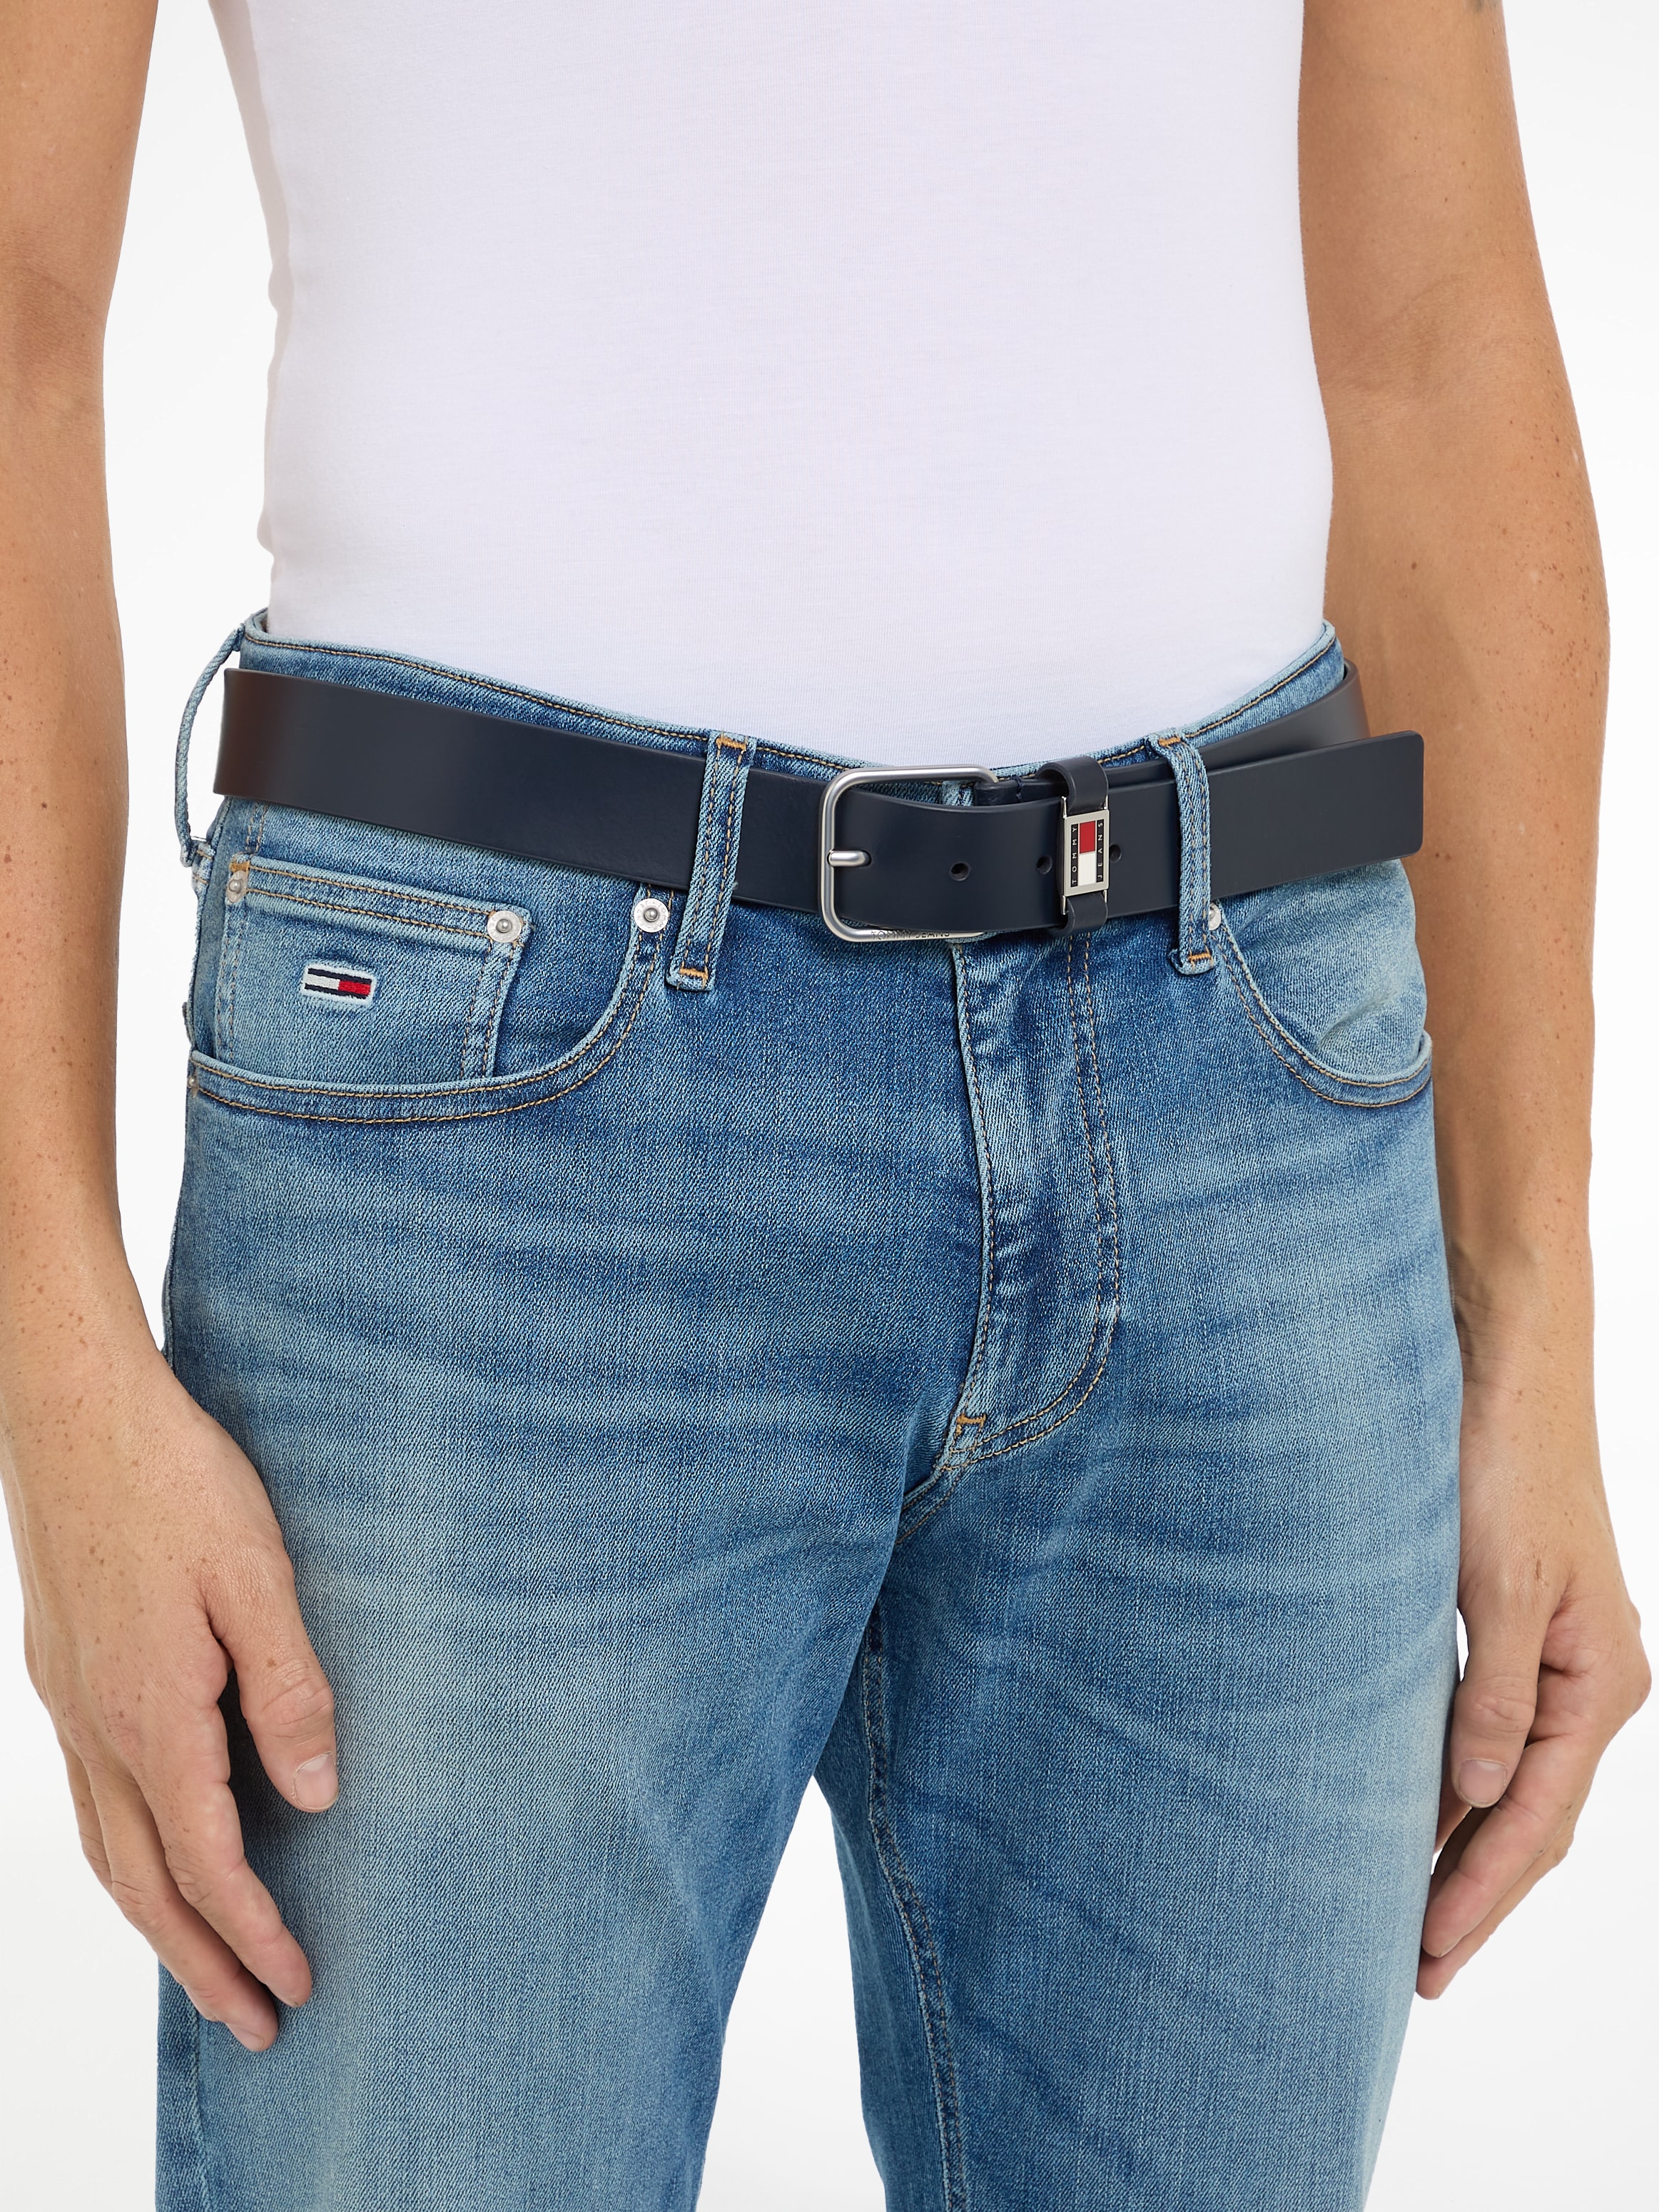 online »TJM Tommy Ledergürtel OTTO SCANTON Jeans 3.5« shoppen bei